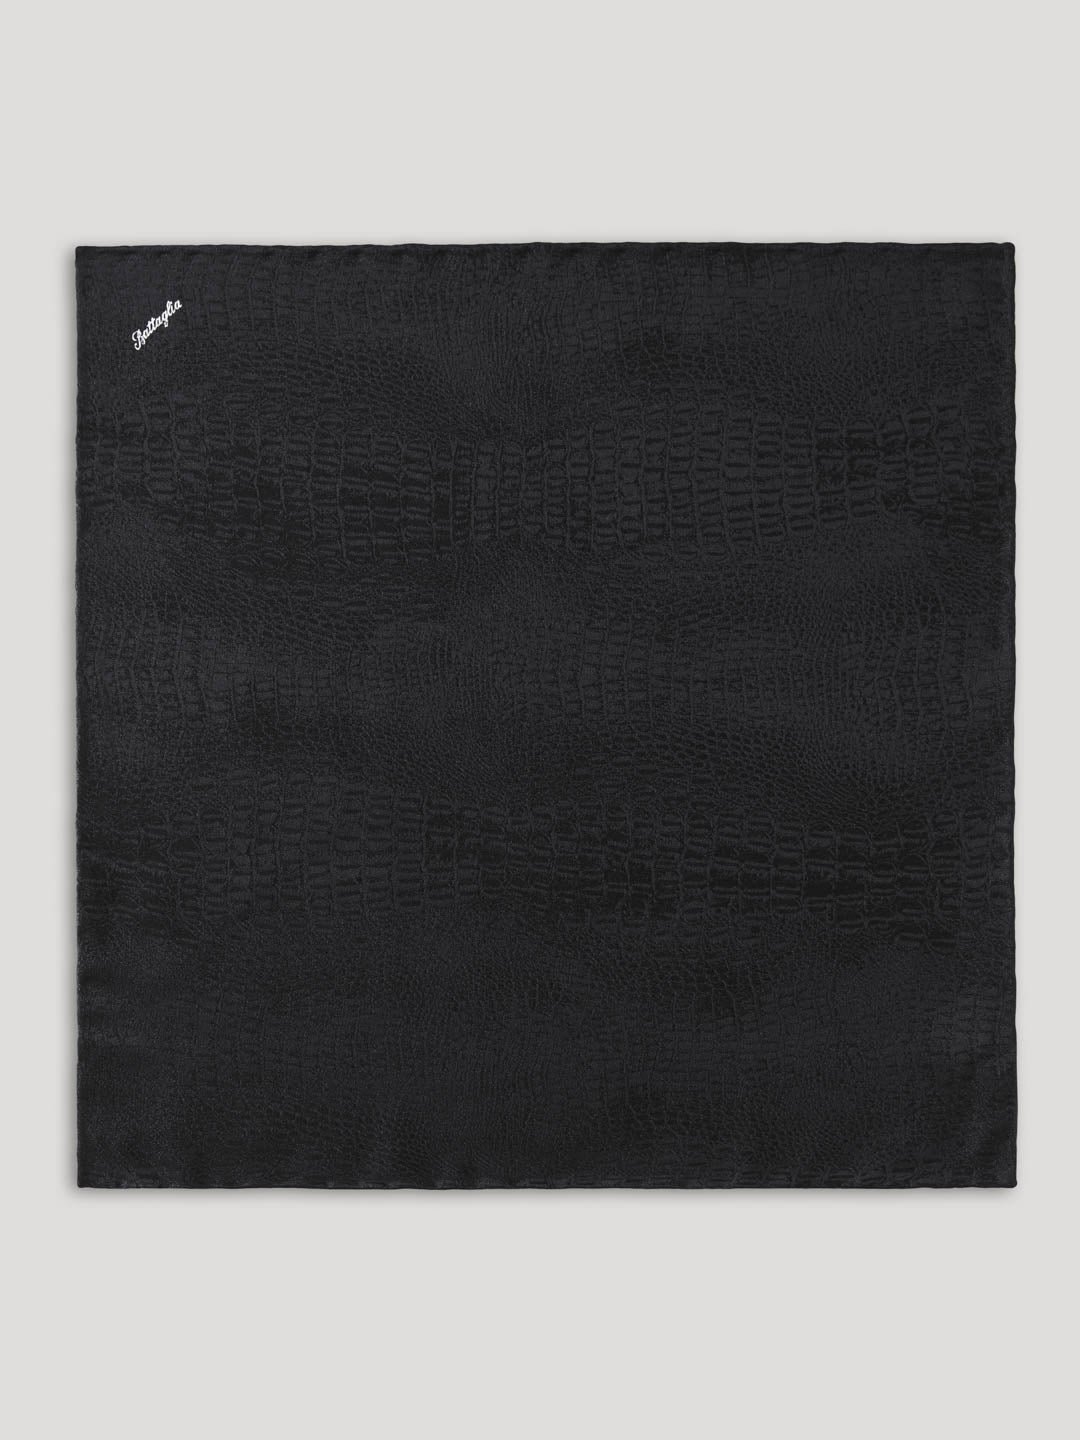 Black silk handkerchief. 